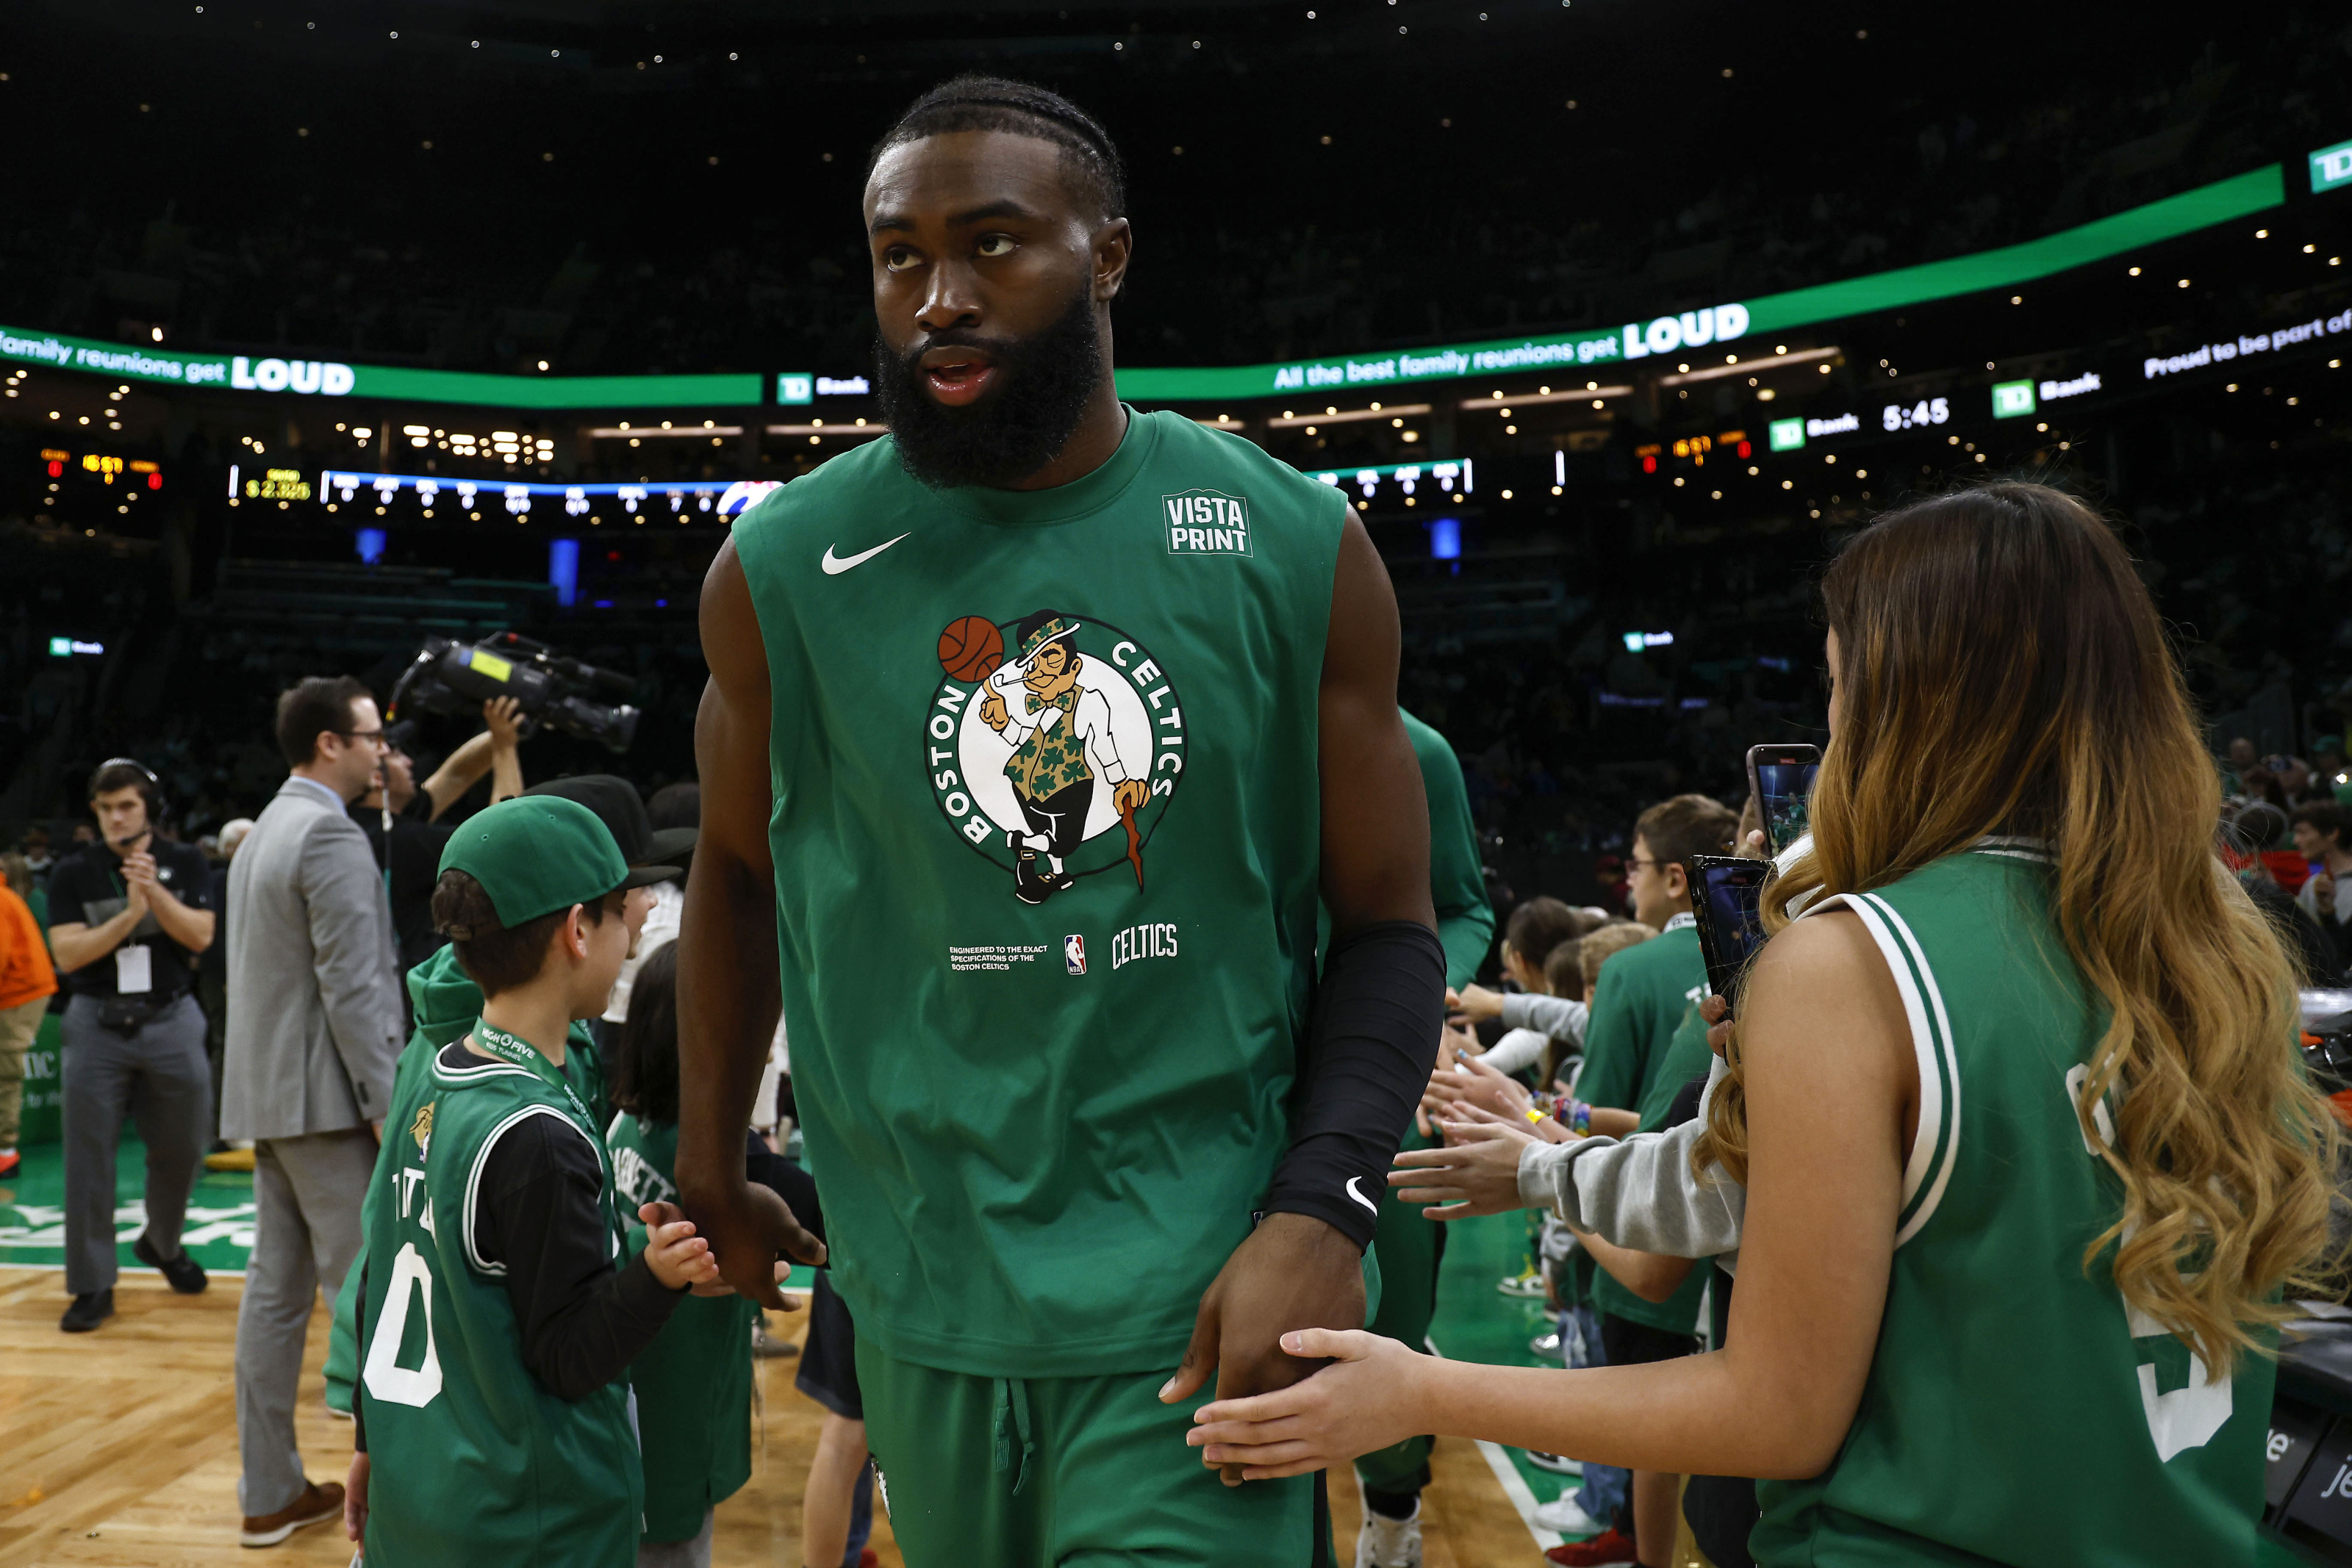 Jaylen Brown - Boston Celtics - 2023 NBA All-Star - Alternate